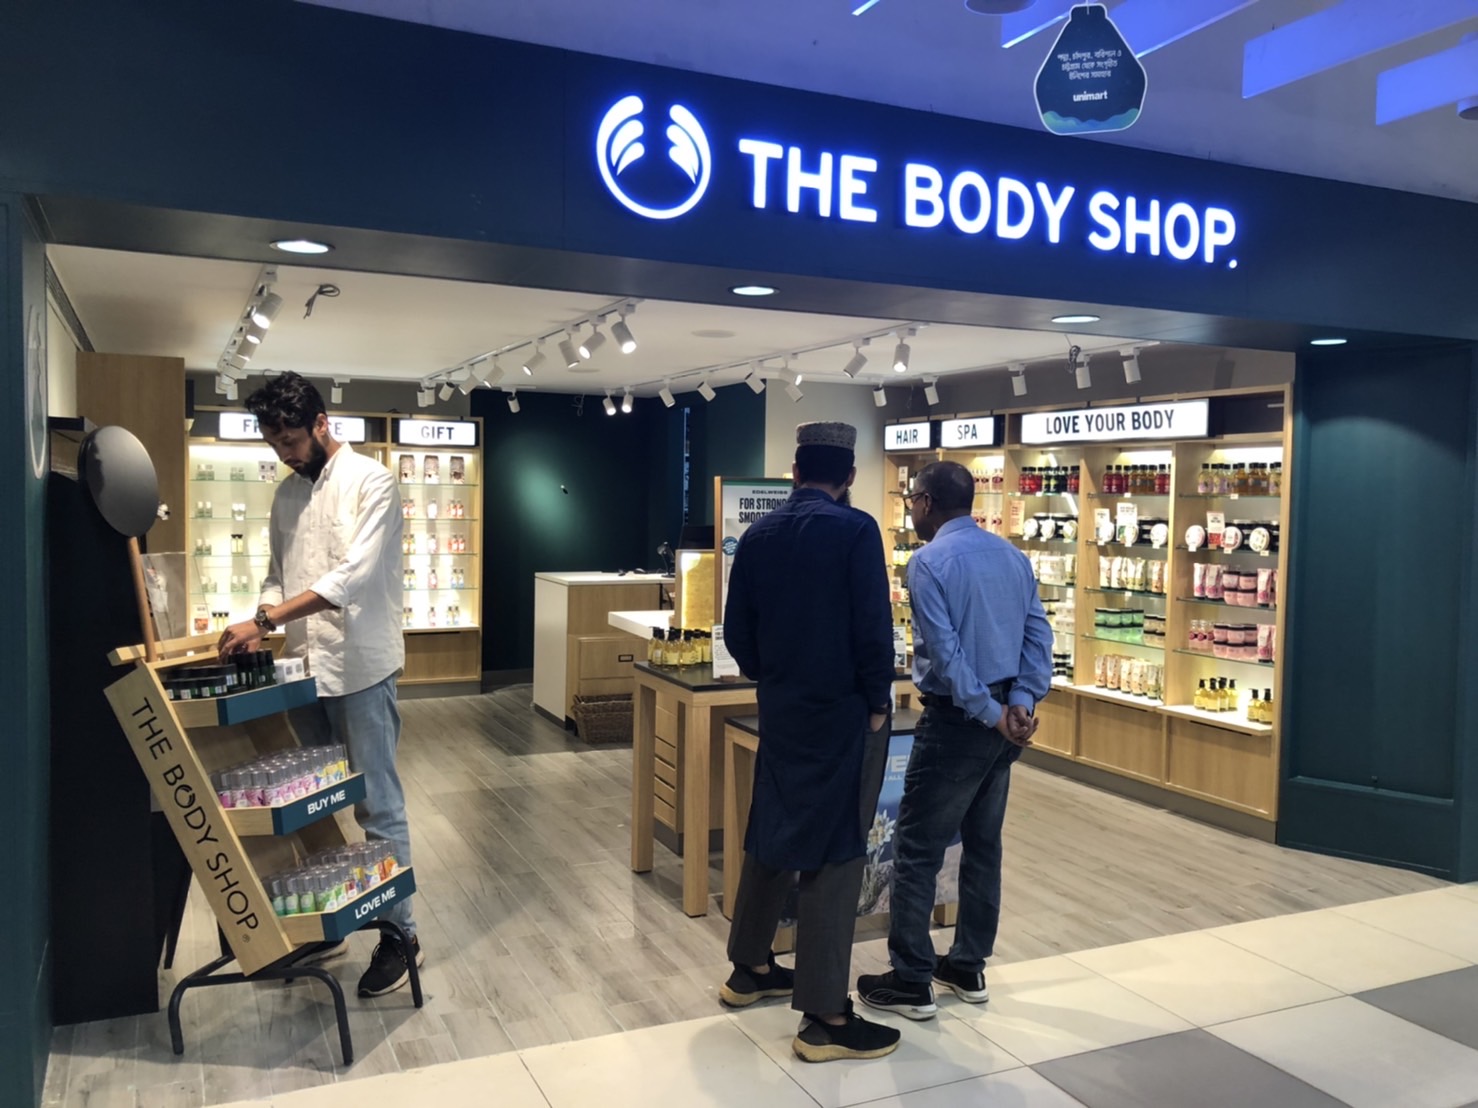 「THE BODY SHOPの新店がオープン!!」ユニマート＠ダッカ市グルシャン２